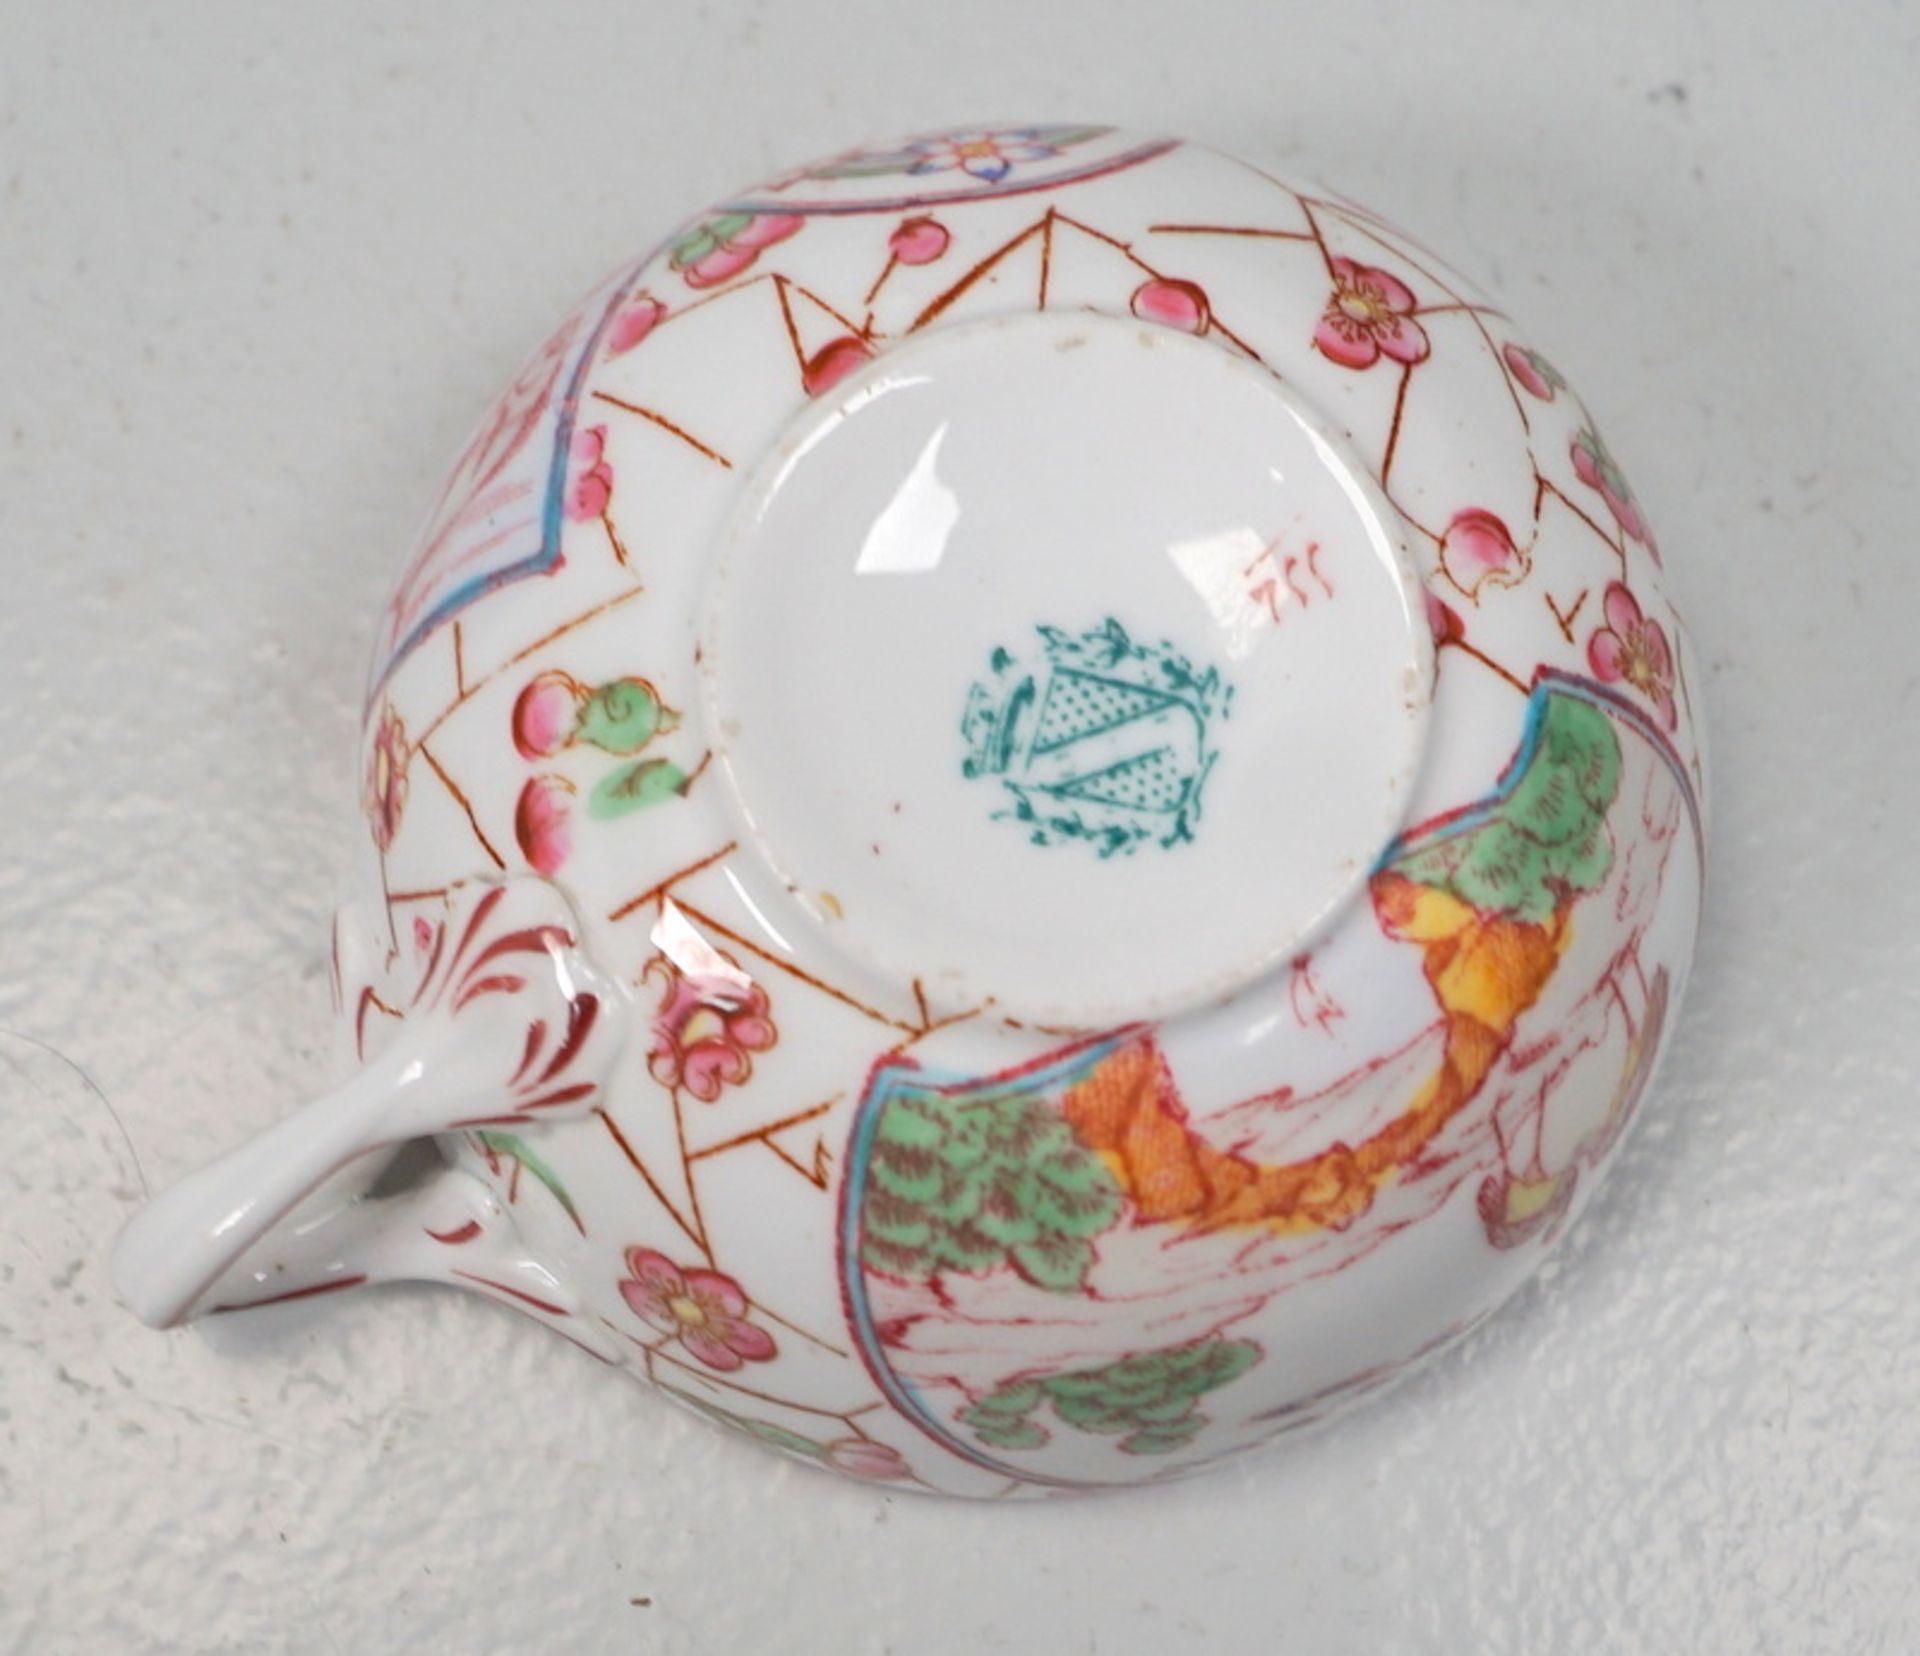 Utzschneider & Cie. Fabrique de Faience & Porcelaine, Grüne Wappenmarke: Teile eines Teeservices mit - Bild 7 aus 7